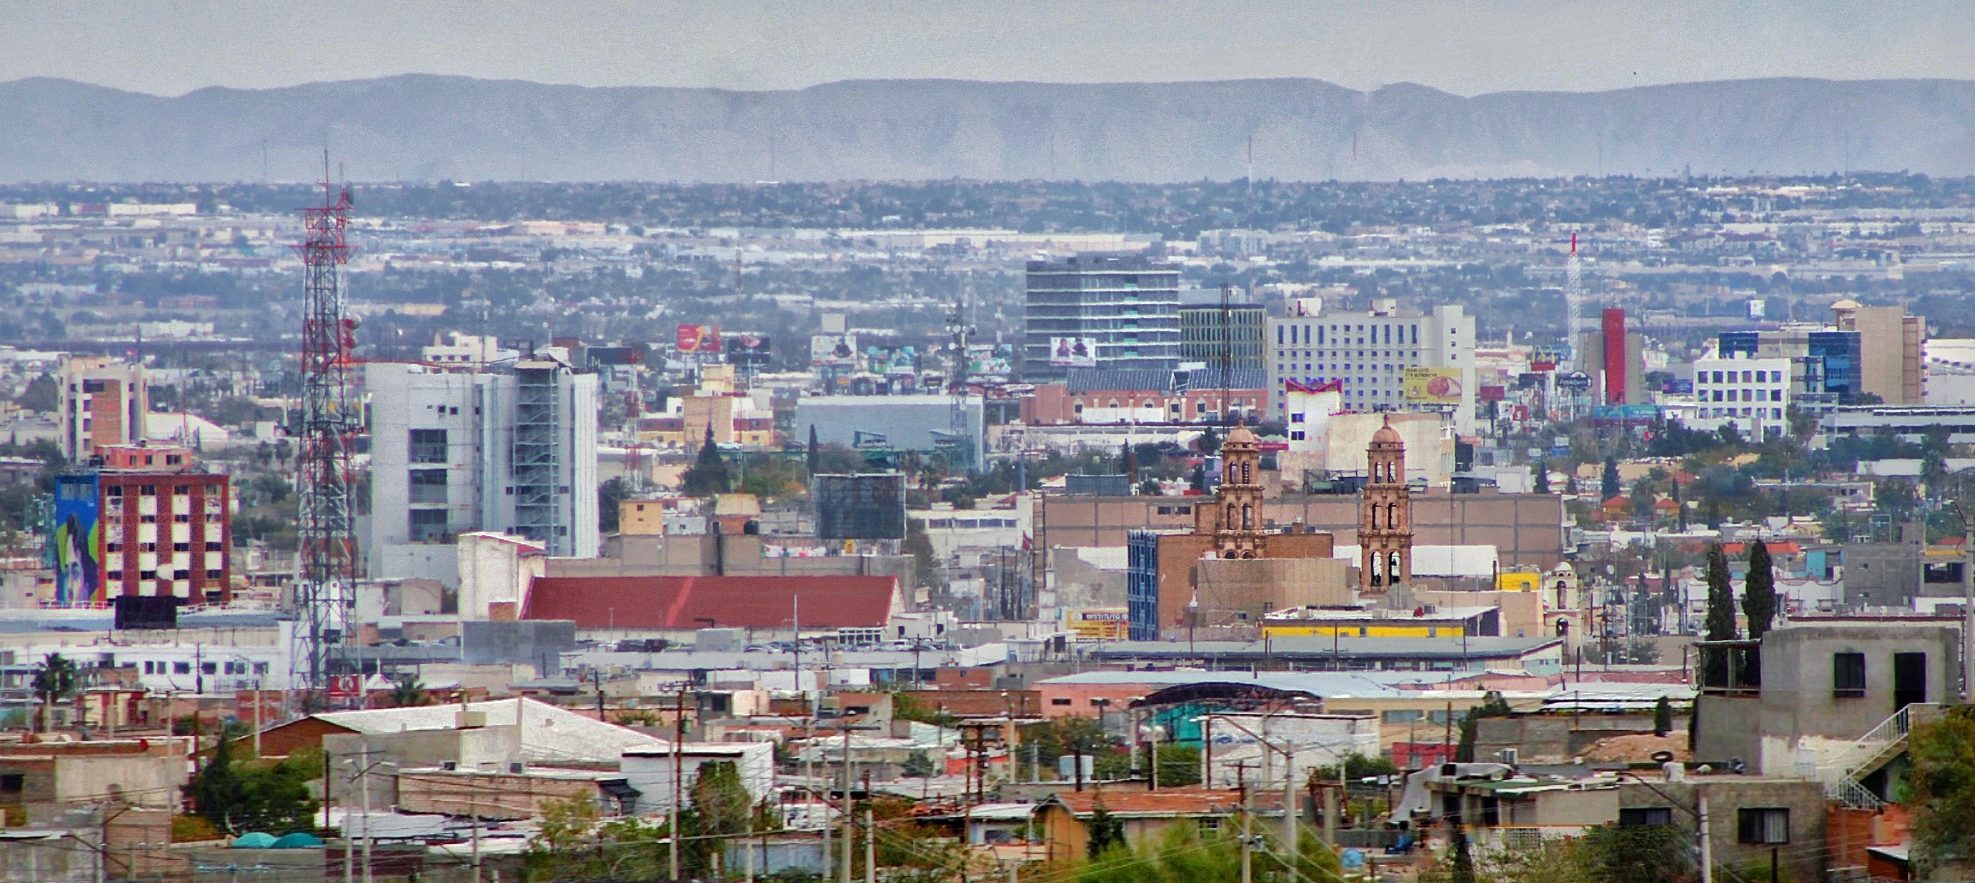 ciudad_juarez_skyline